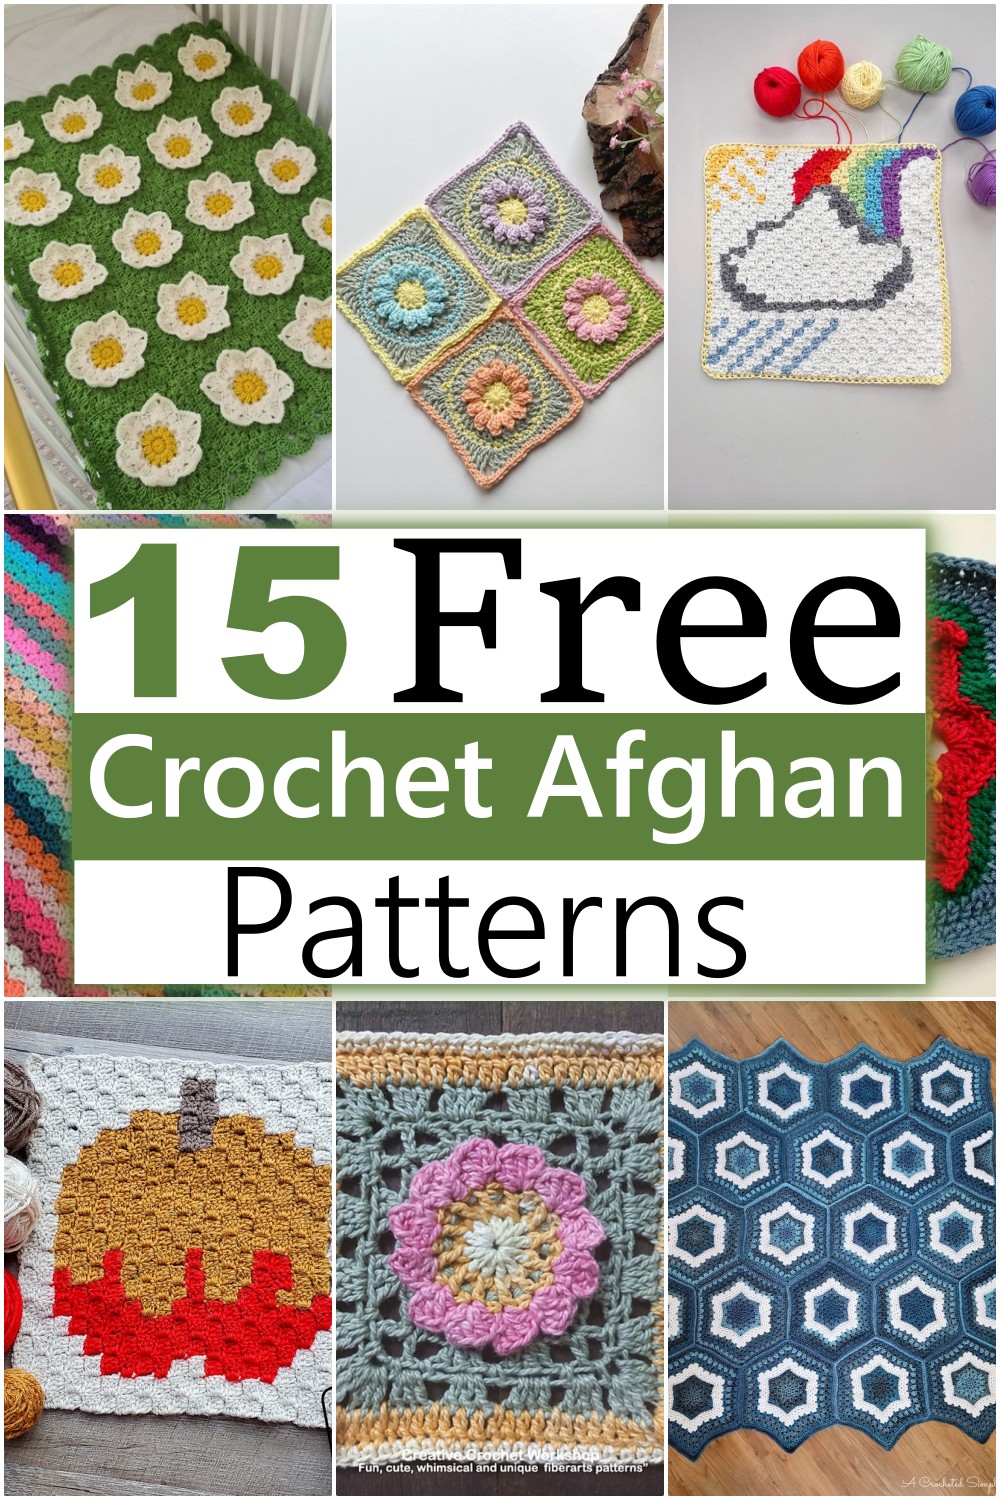  Free Crochet Afghan Patterns 